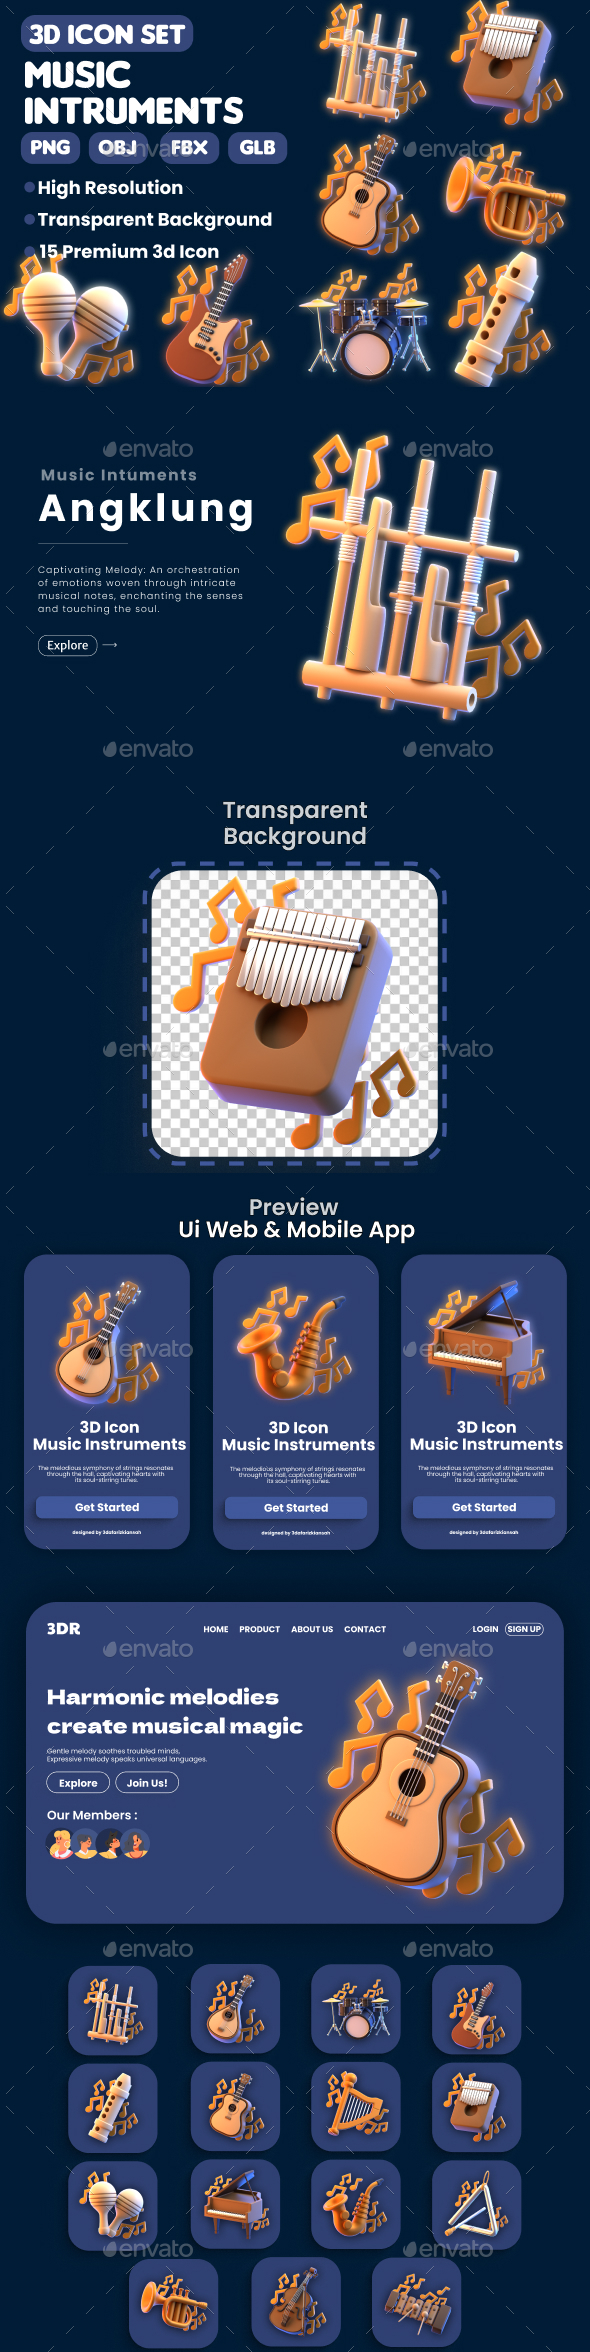 [DOWNLOAD]3D Music Instruments